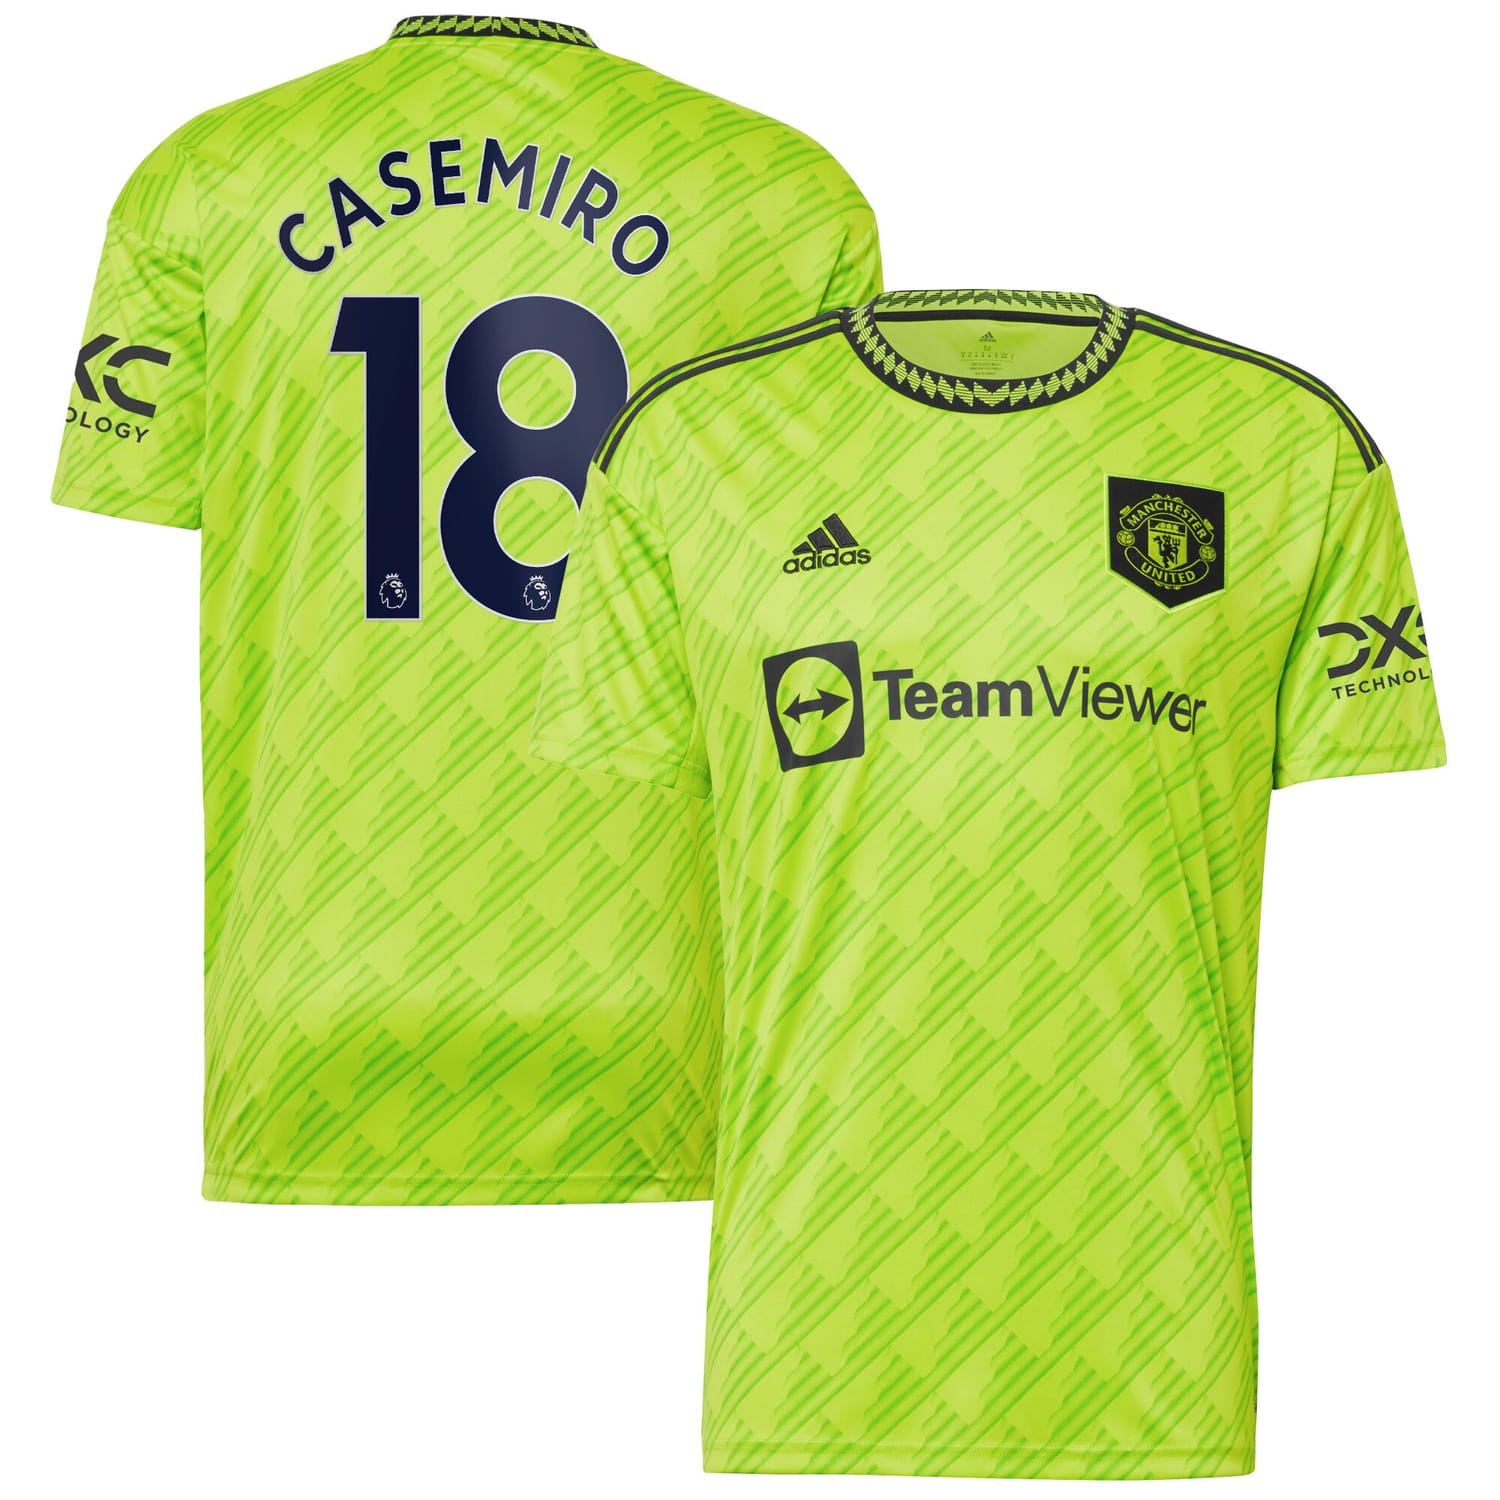 Premier League Manchester United Third Jersey Shirt 2022-23 player Casemiro 18 printing for Men